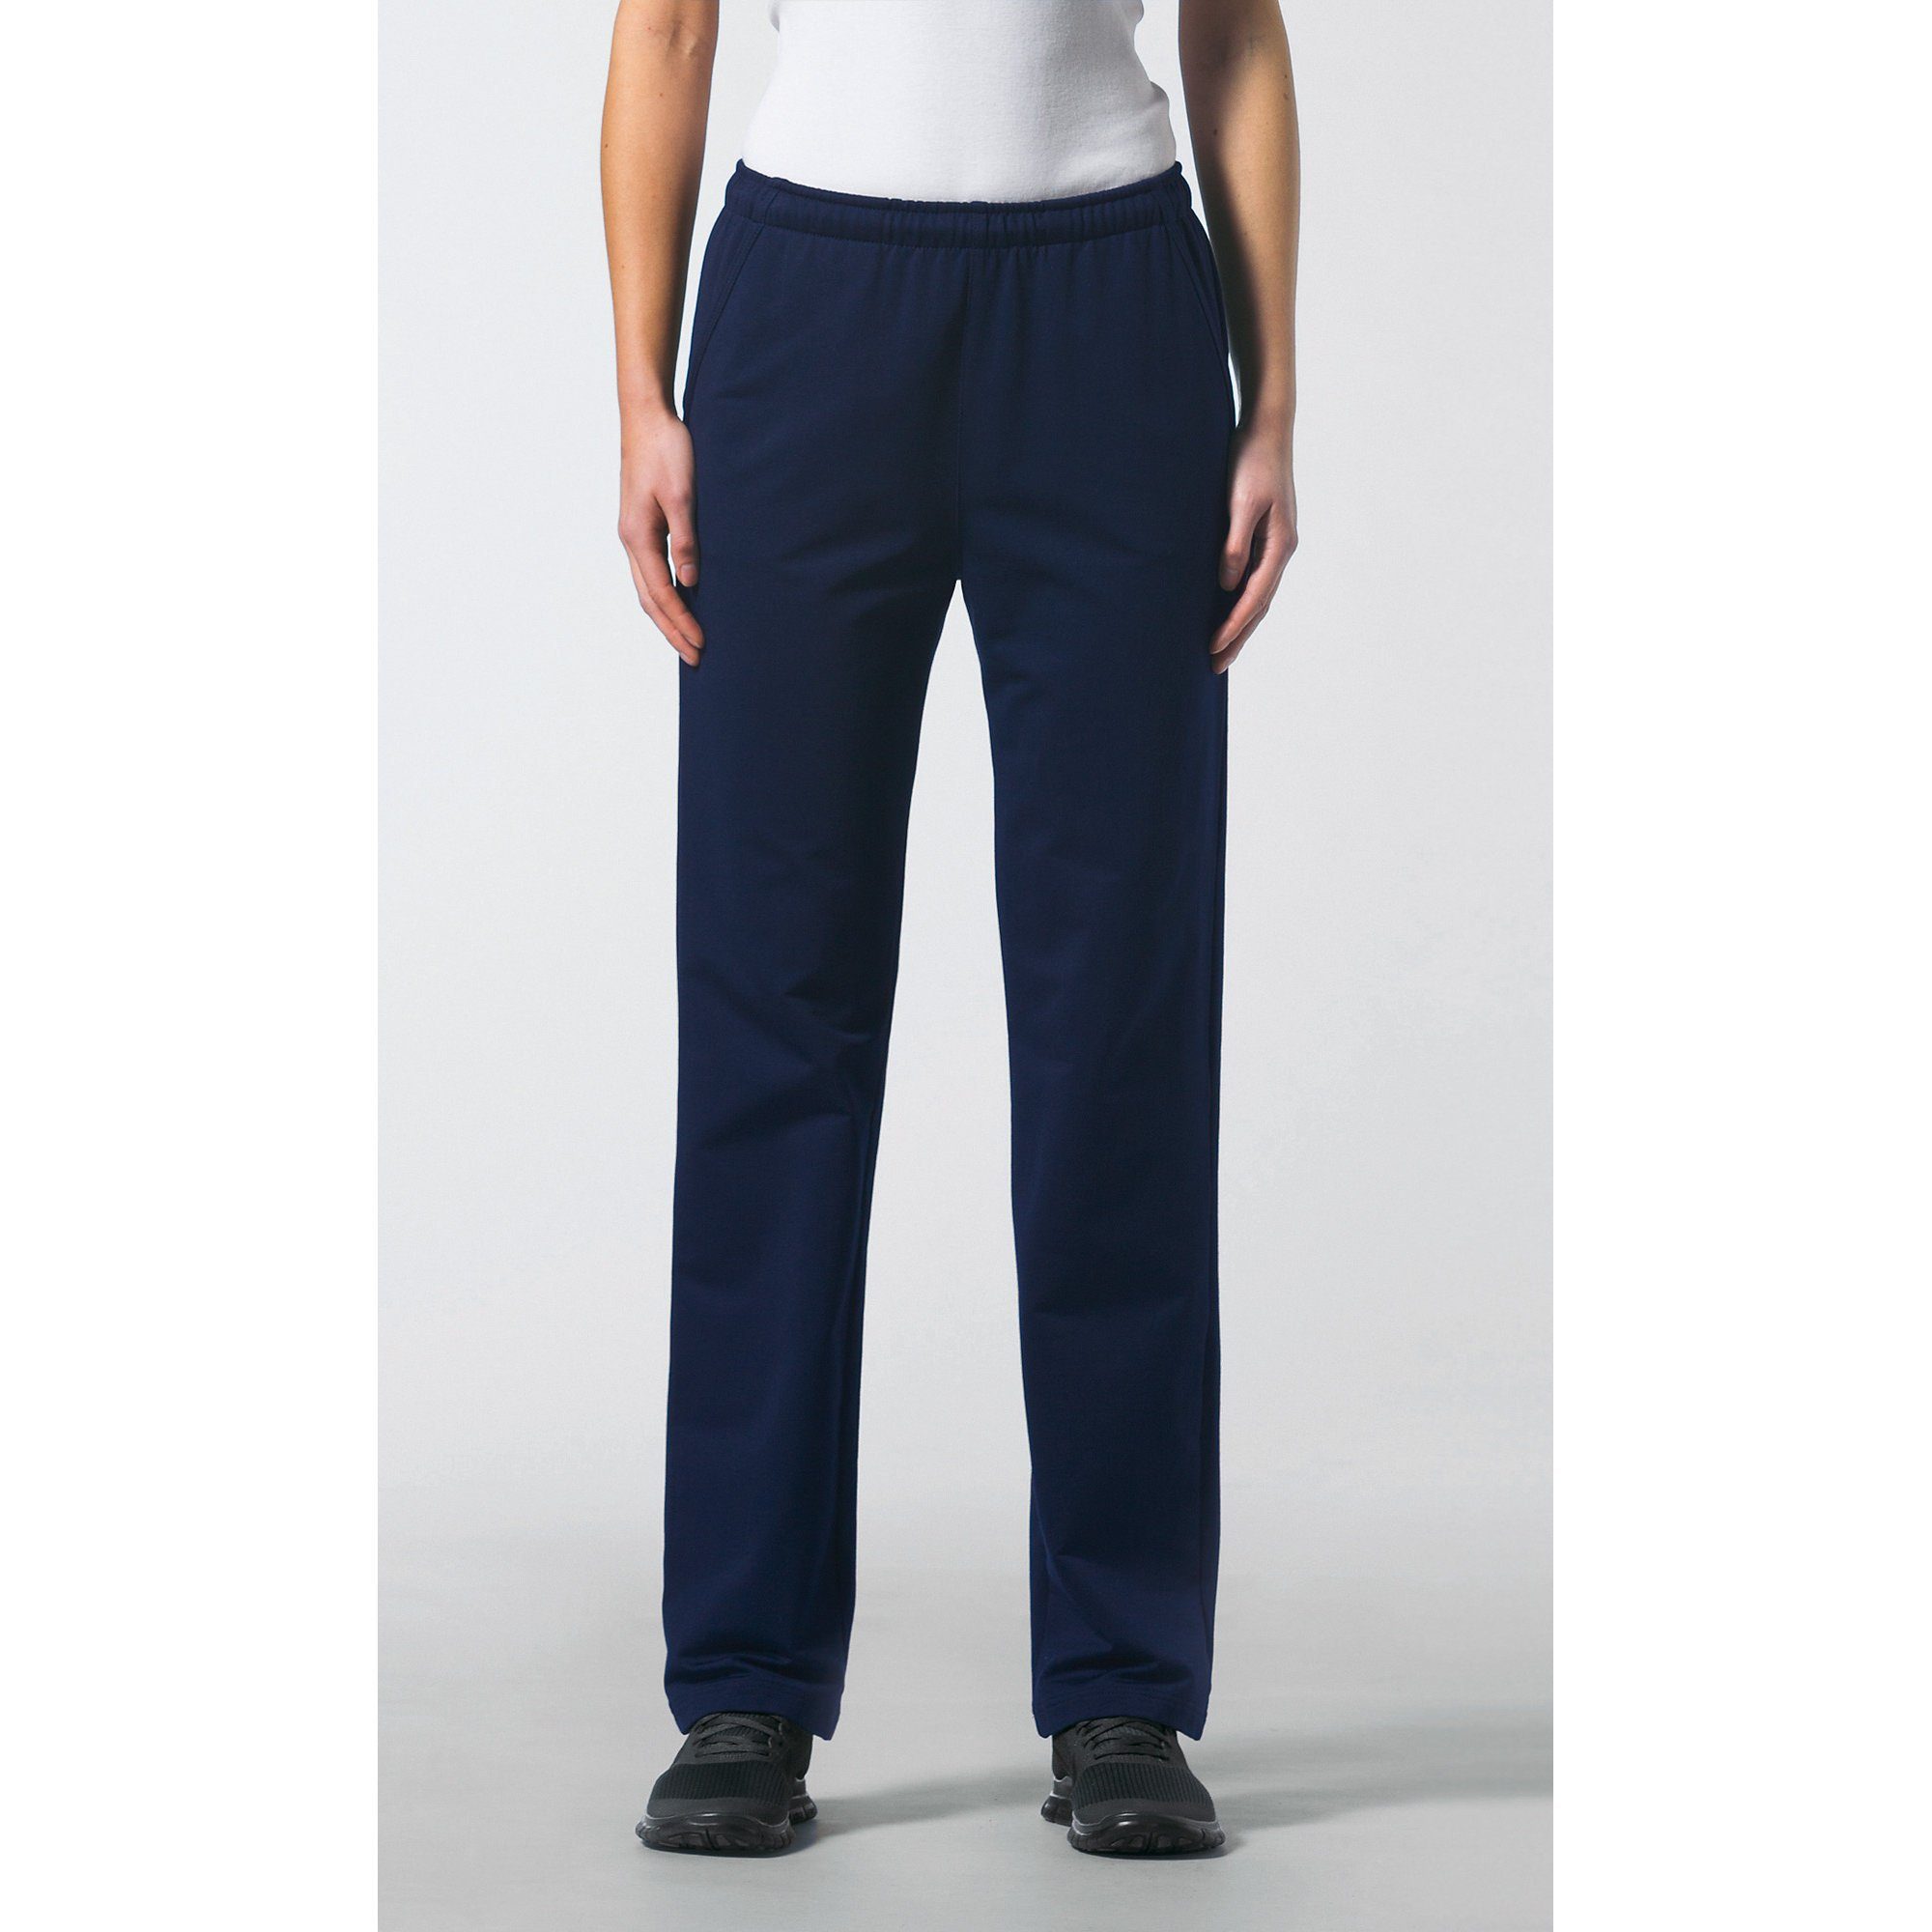 SCHNEIDER Sportswear Jogginghose Damen-Freizeithose "PISAW", Uni marine lang